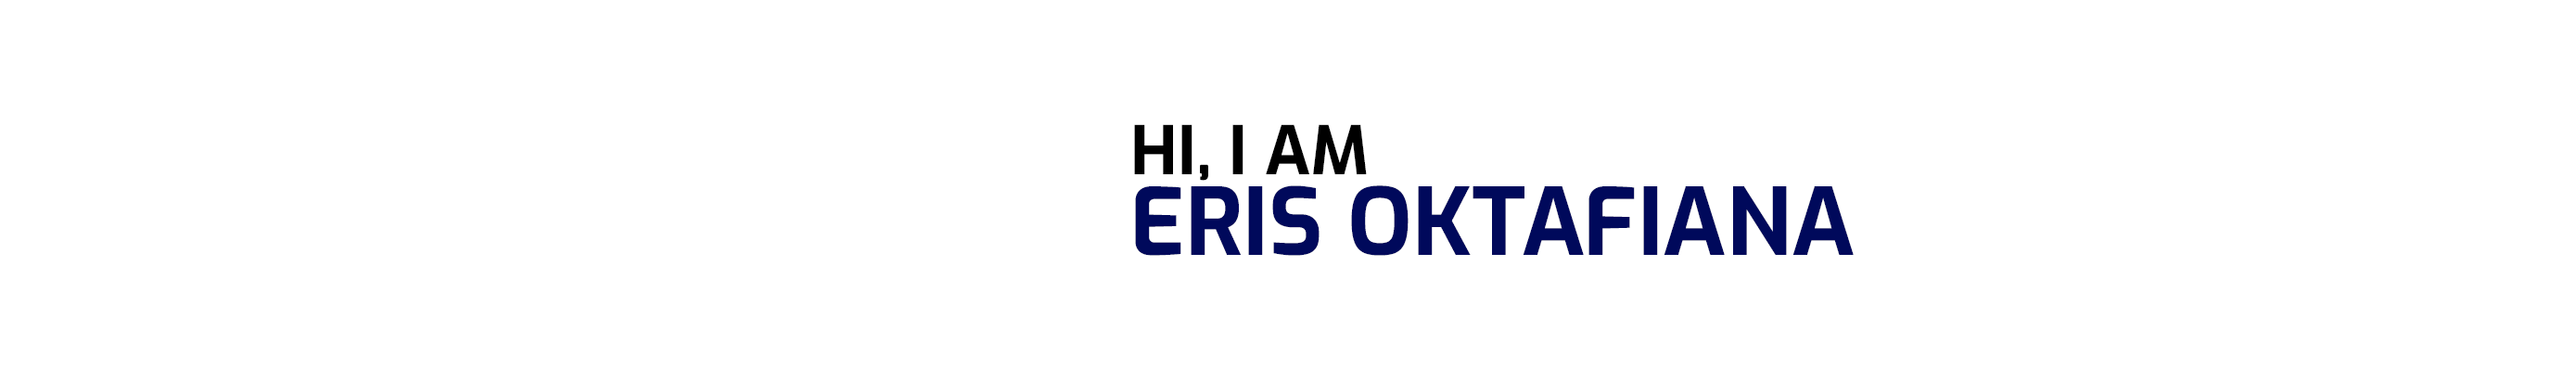 Eris Oktafiana's profile banner